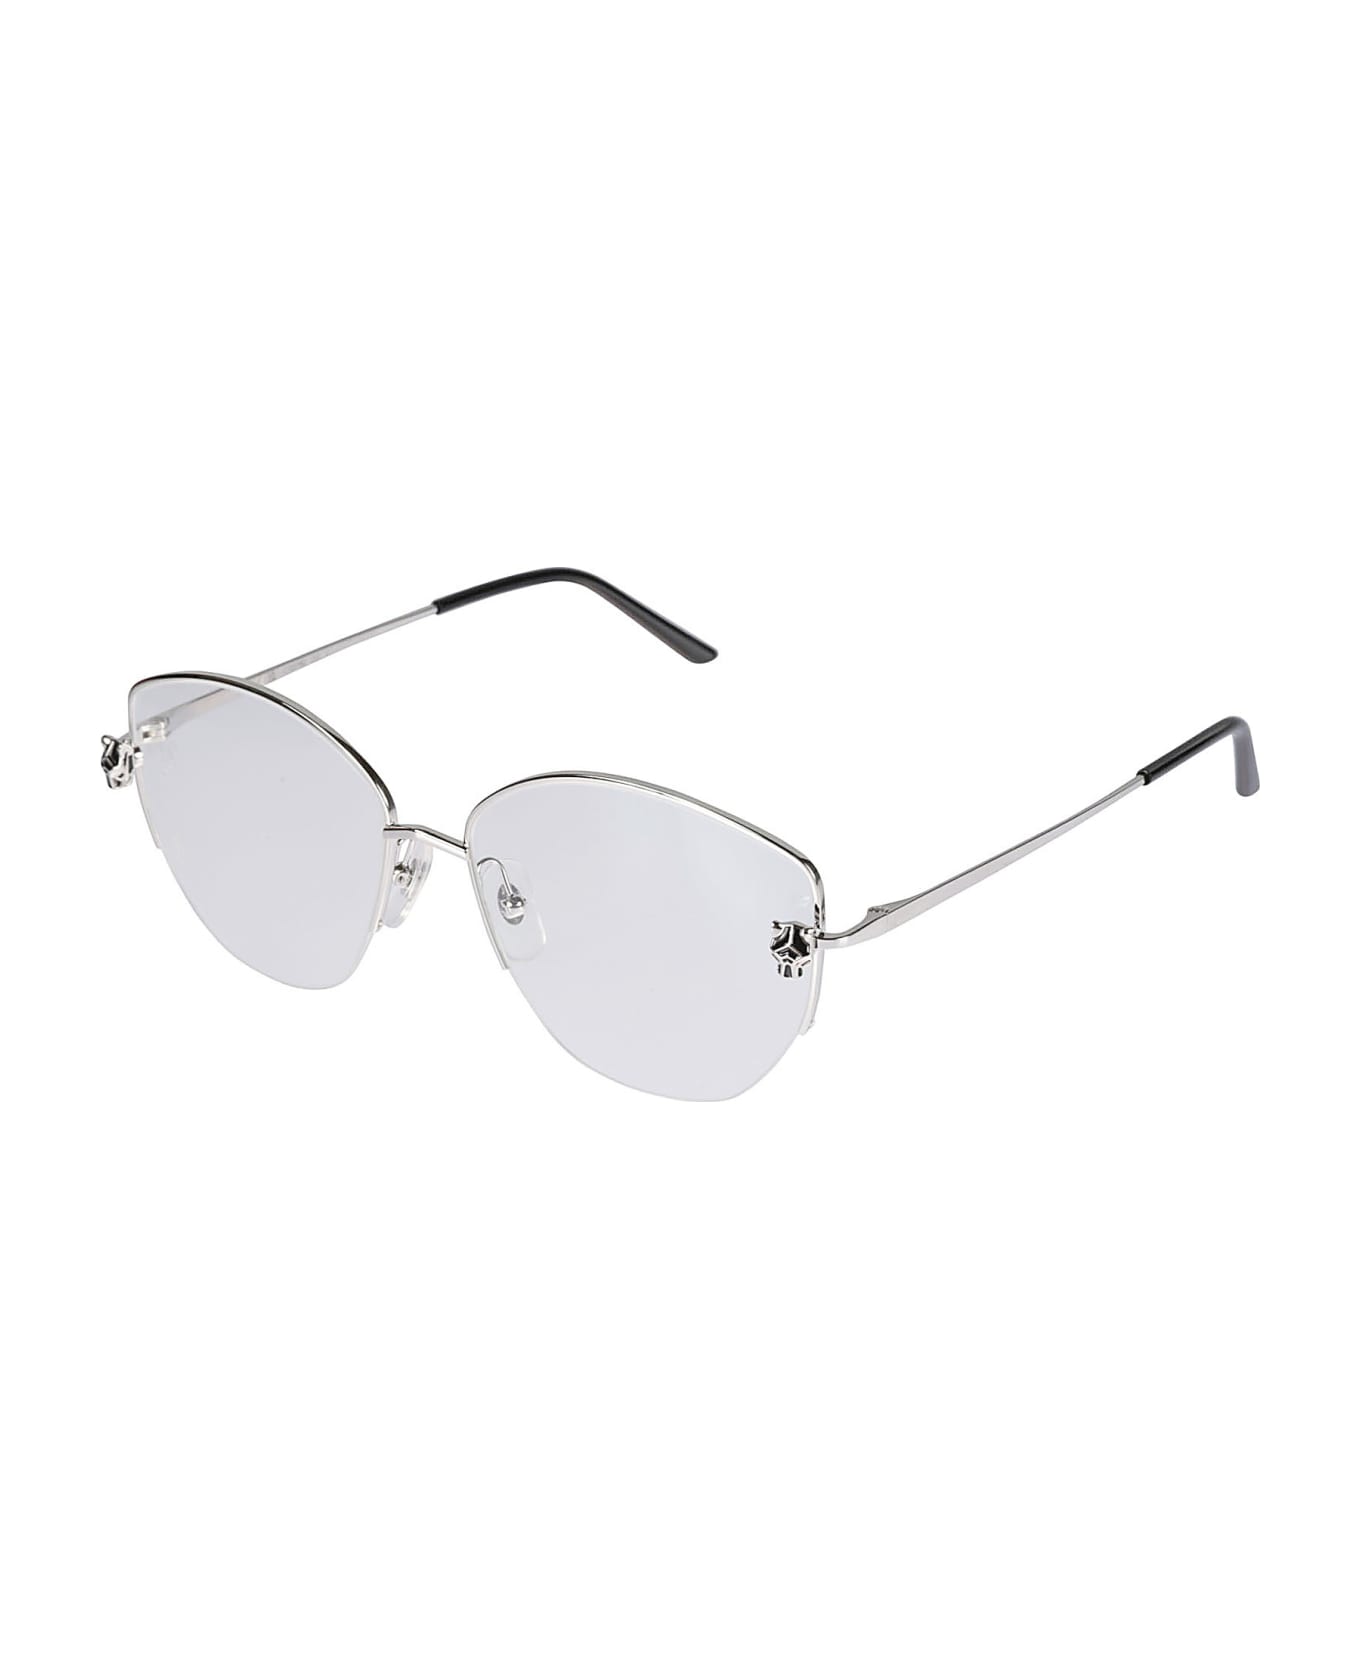 Cartier Eyewear Optical Glasses - 002 silver silver transpa